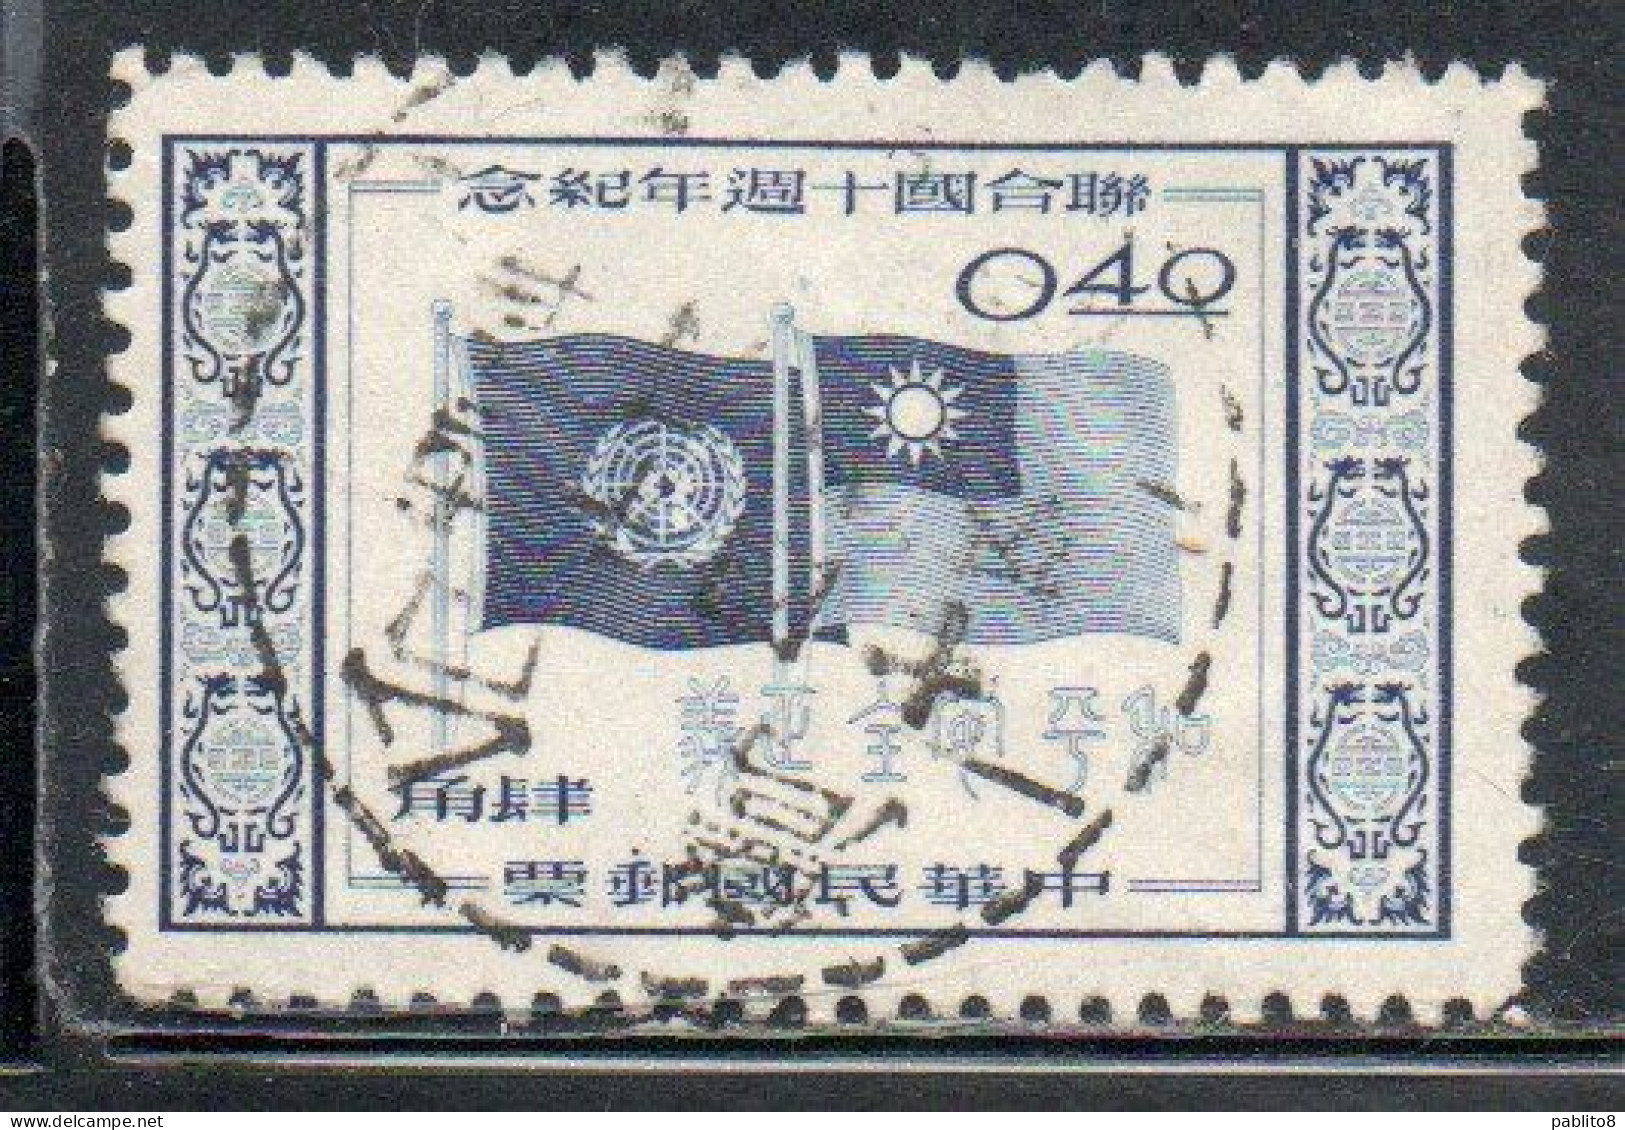 CHINA REPUBLIC CINA TAIWAN FORMOSA 1955 UN ONU ANNIVERSARY FLAGS 40c USED USATO OBLITERE' - Used Stamps